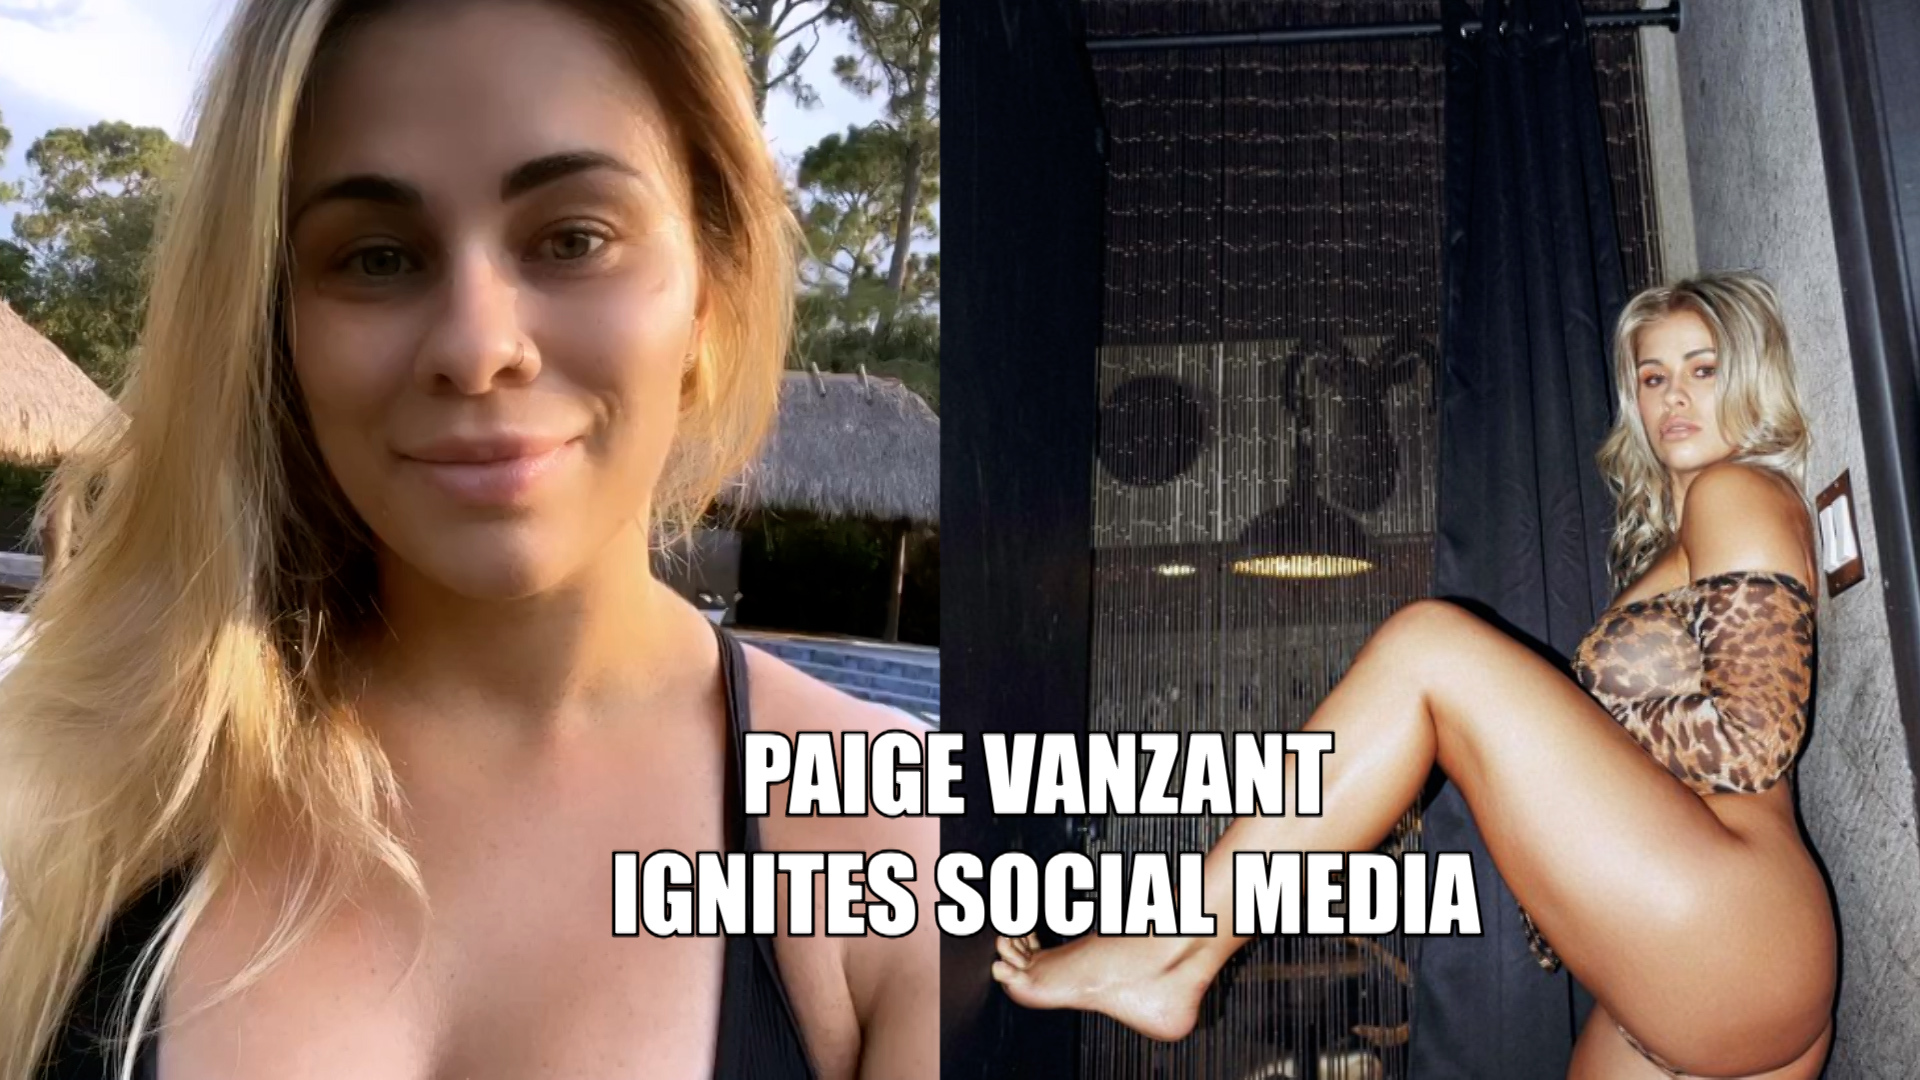 Paige vanzant onlyfans video leak